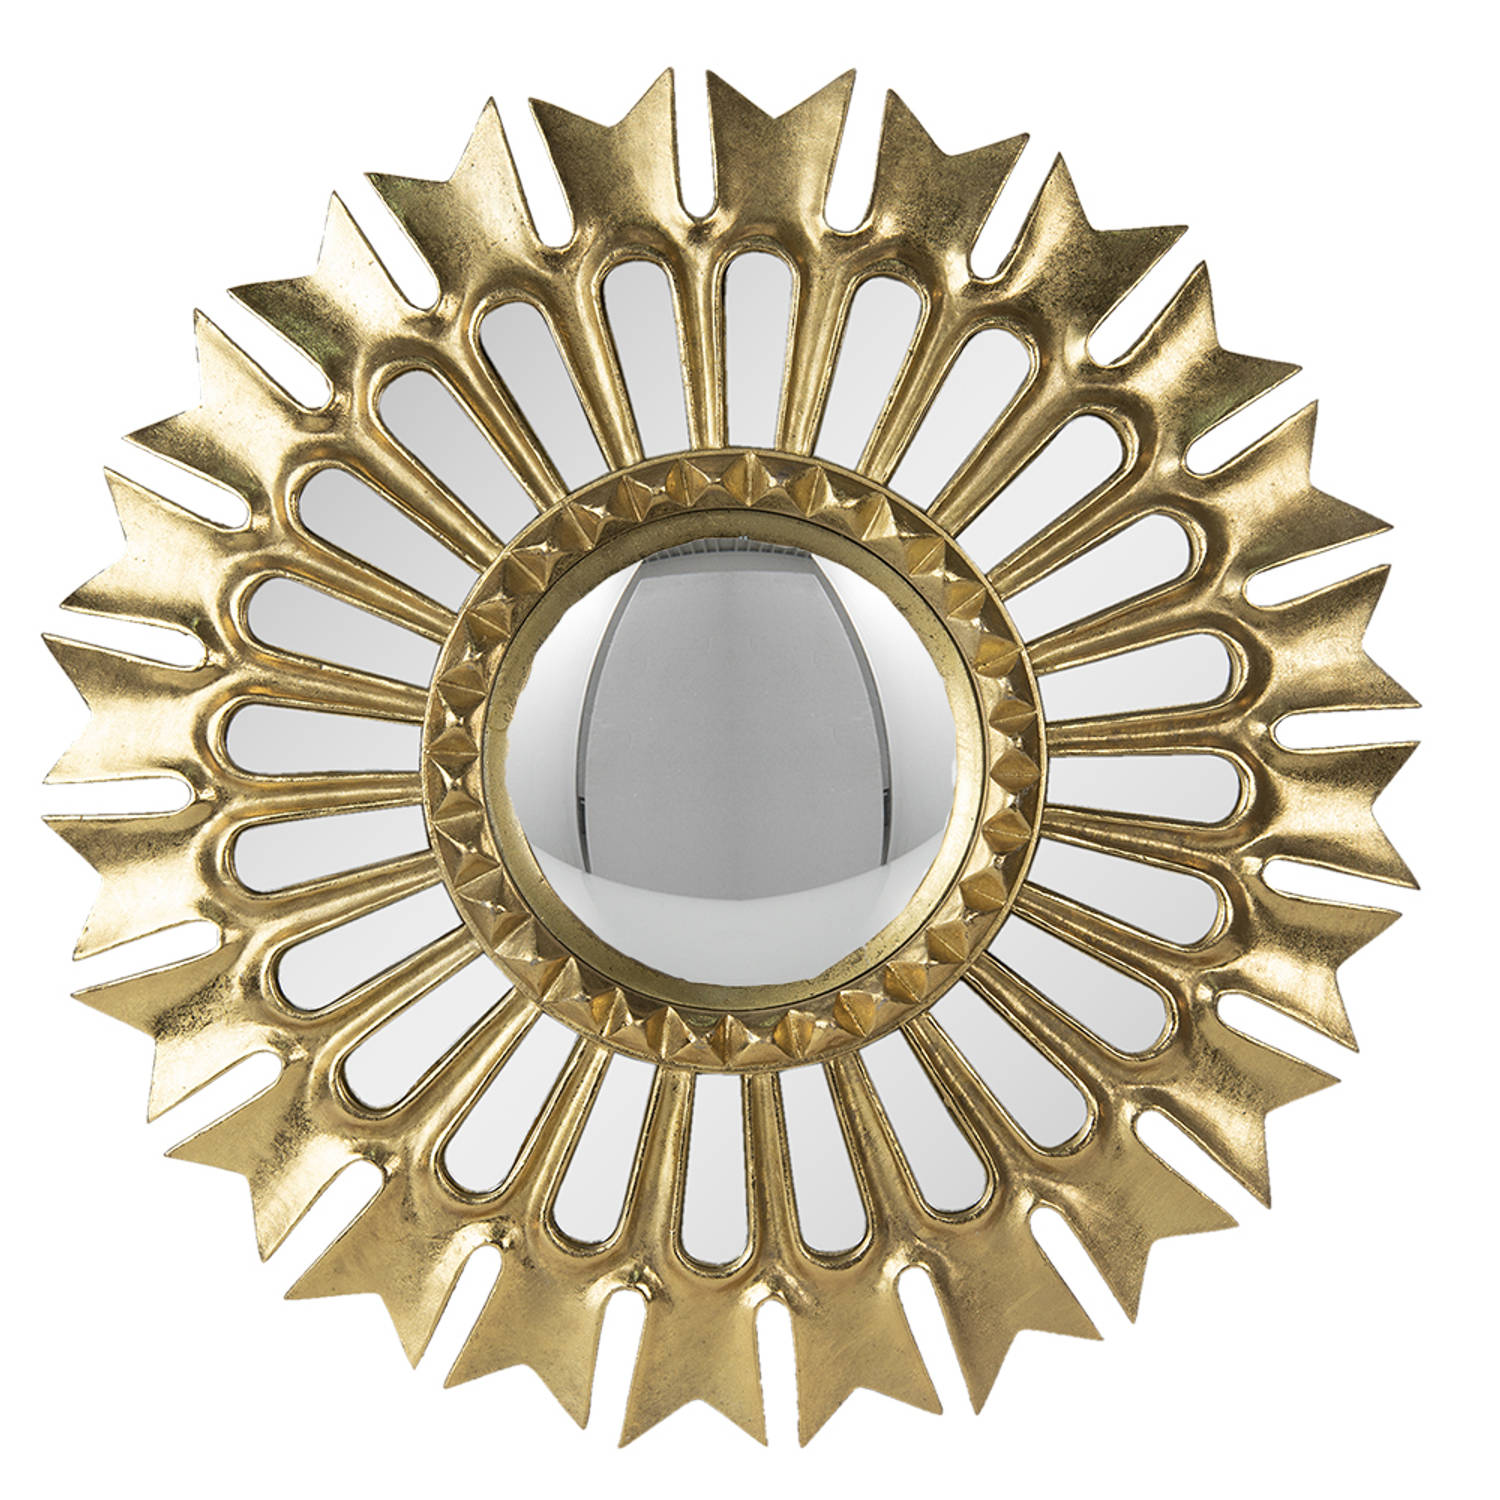 HAES DECO - Bolle ronde Spiegel met versierde rand - Kleur Goudkleurig - Formaat Ø 38x3 cm - Materiaal Polyresin / Glas - Wandspiegel, Spiegel rond, Convex Glas